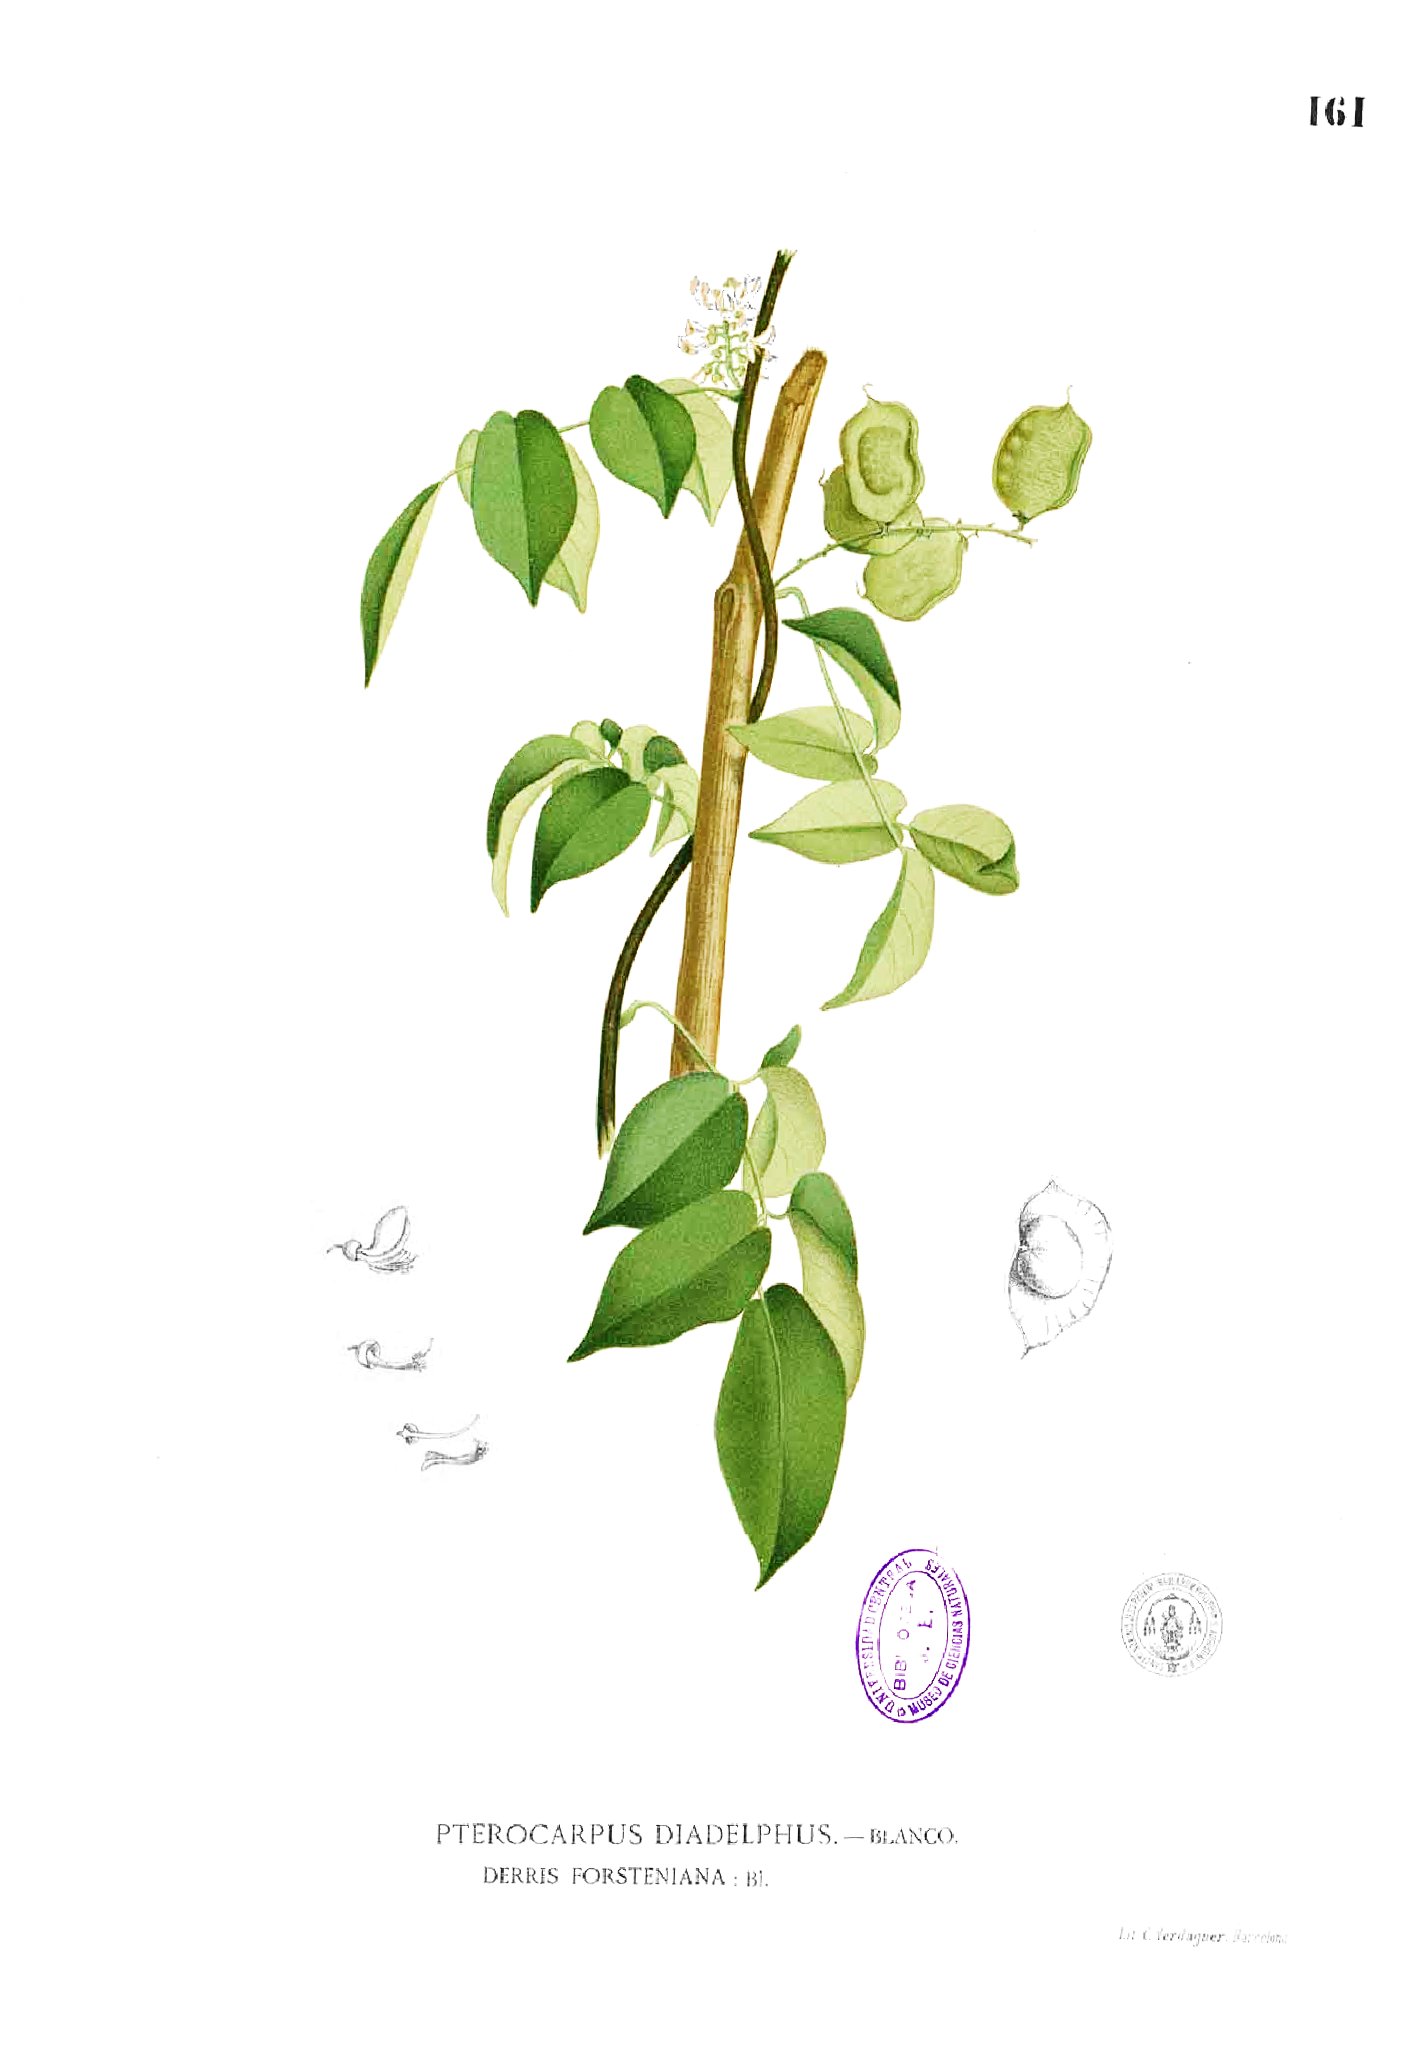 Aganope thyrsiflora Blanco1.161